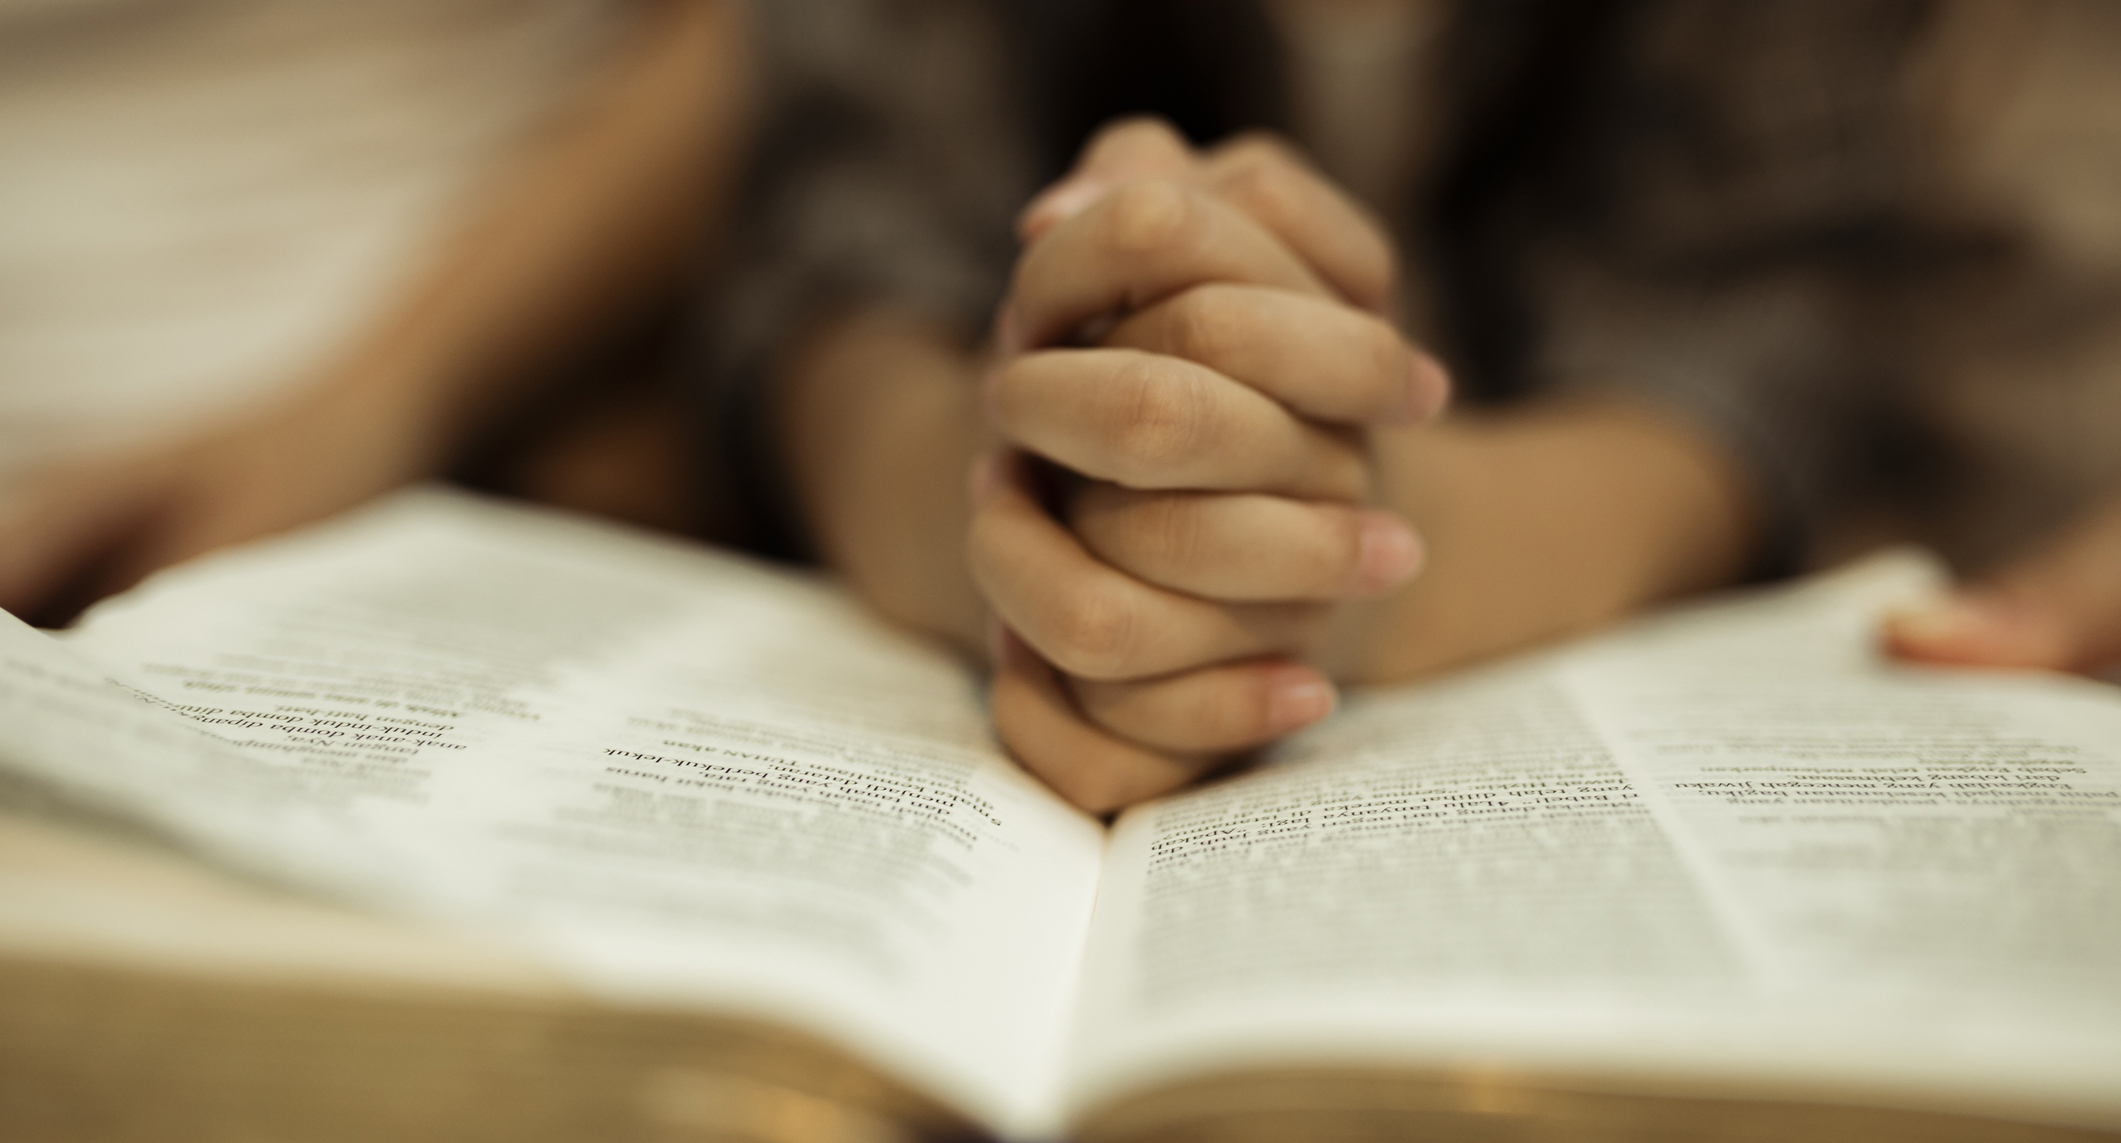 A child's hands in prayer